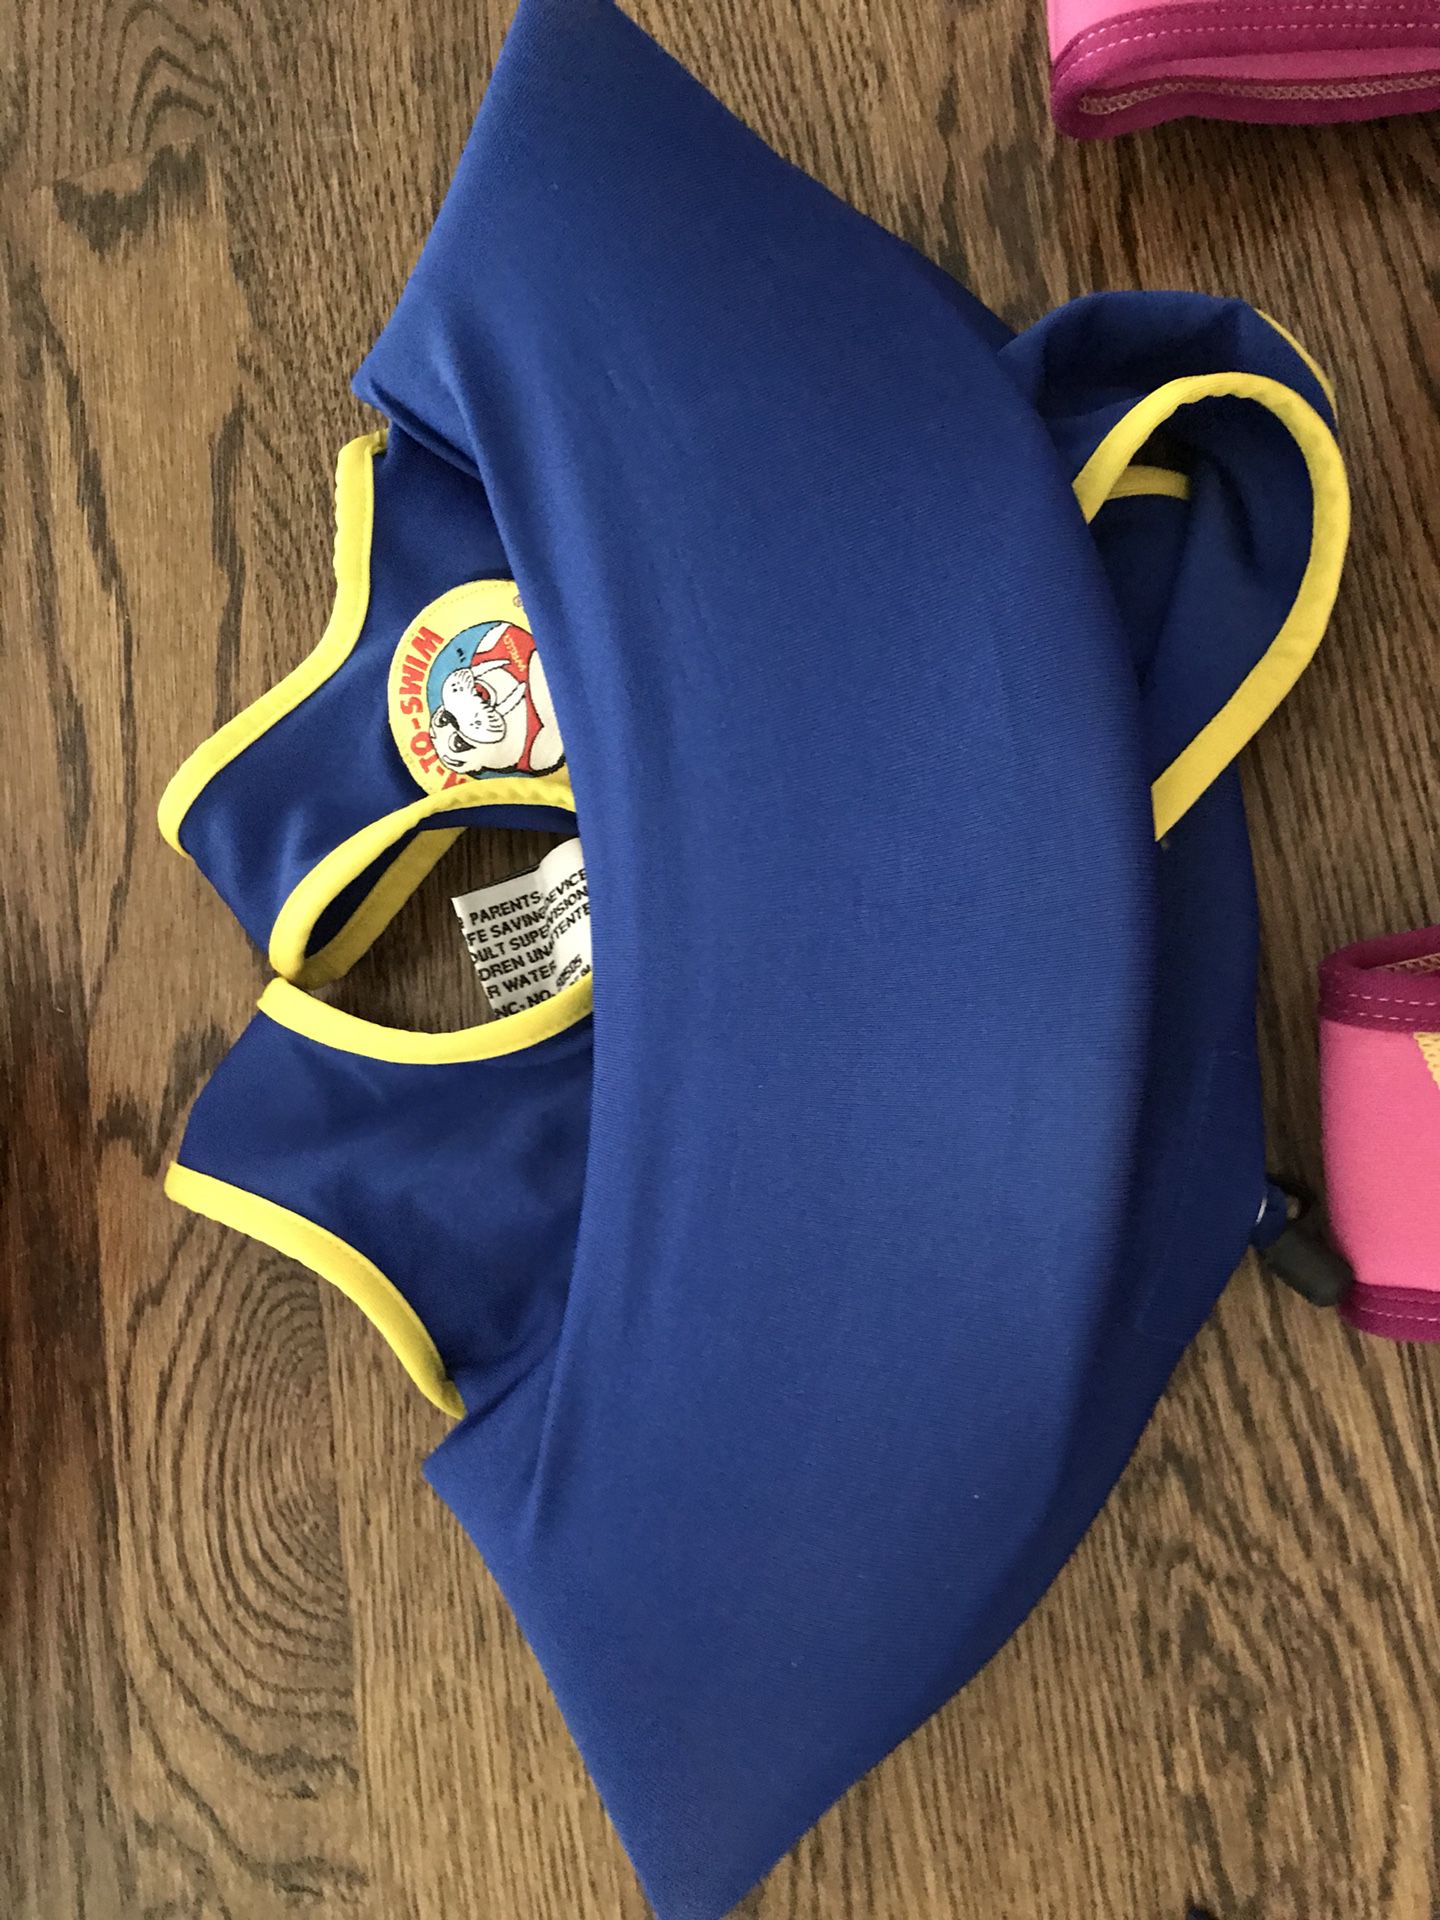 $5 each $5 swim vest , pool lifesaver, beach, water floties Thomas train items